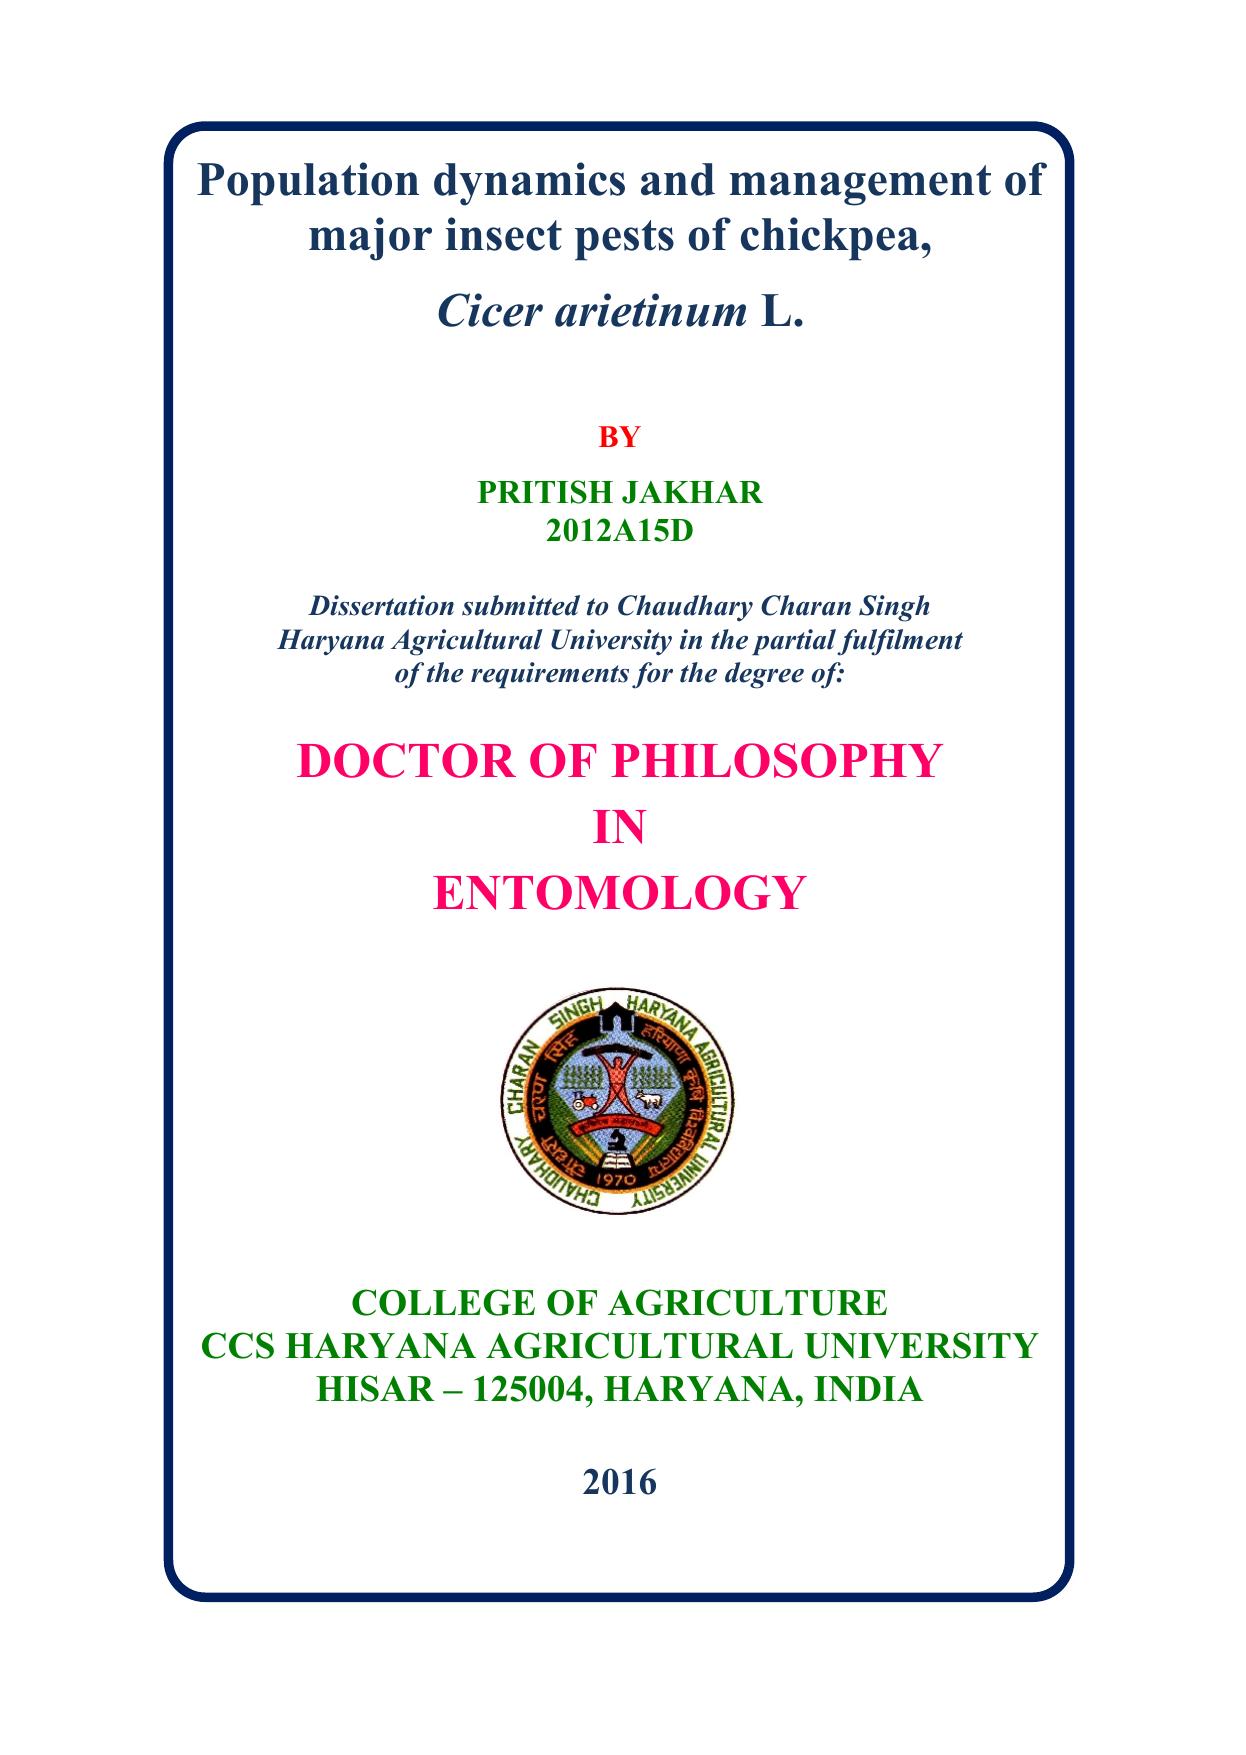 doctor of philosophy in entomology 2017